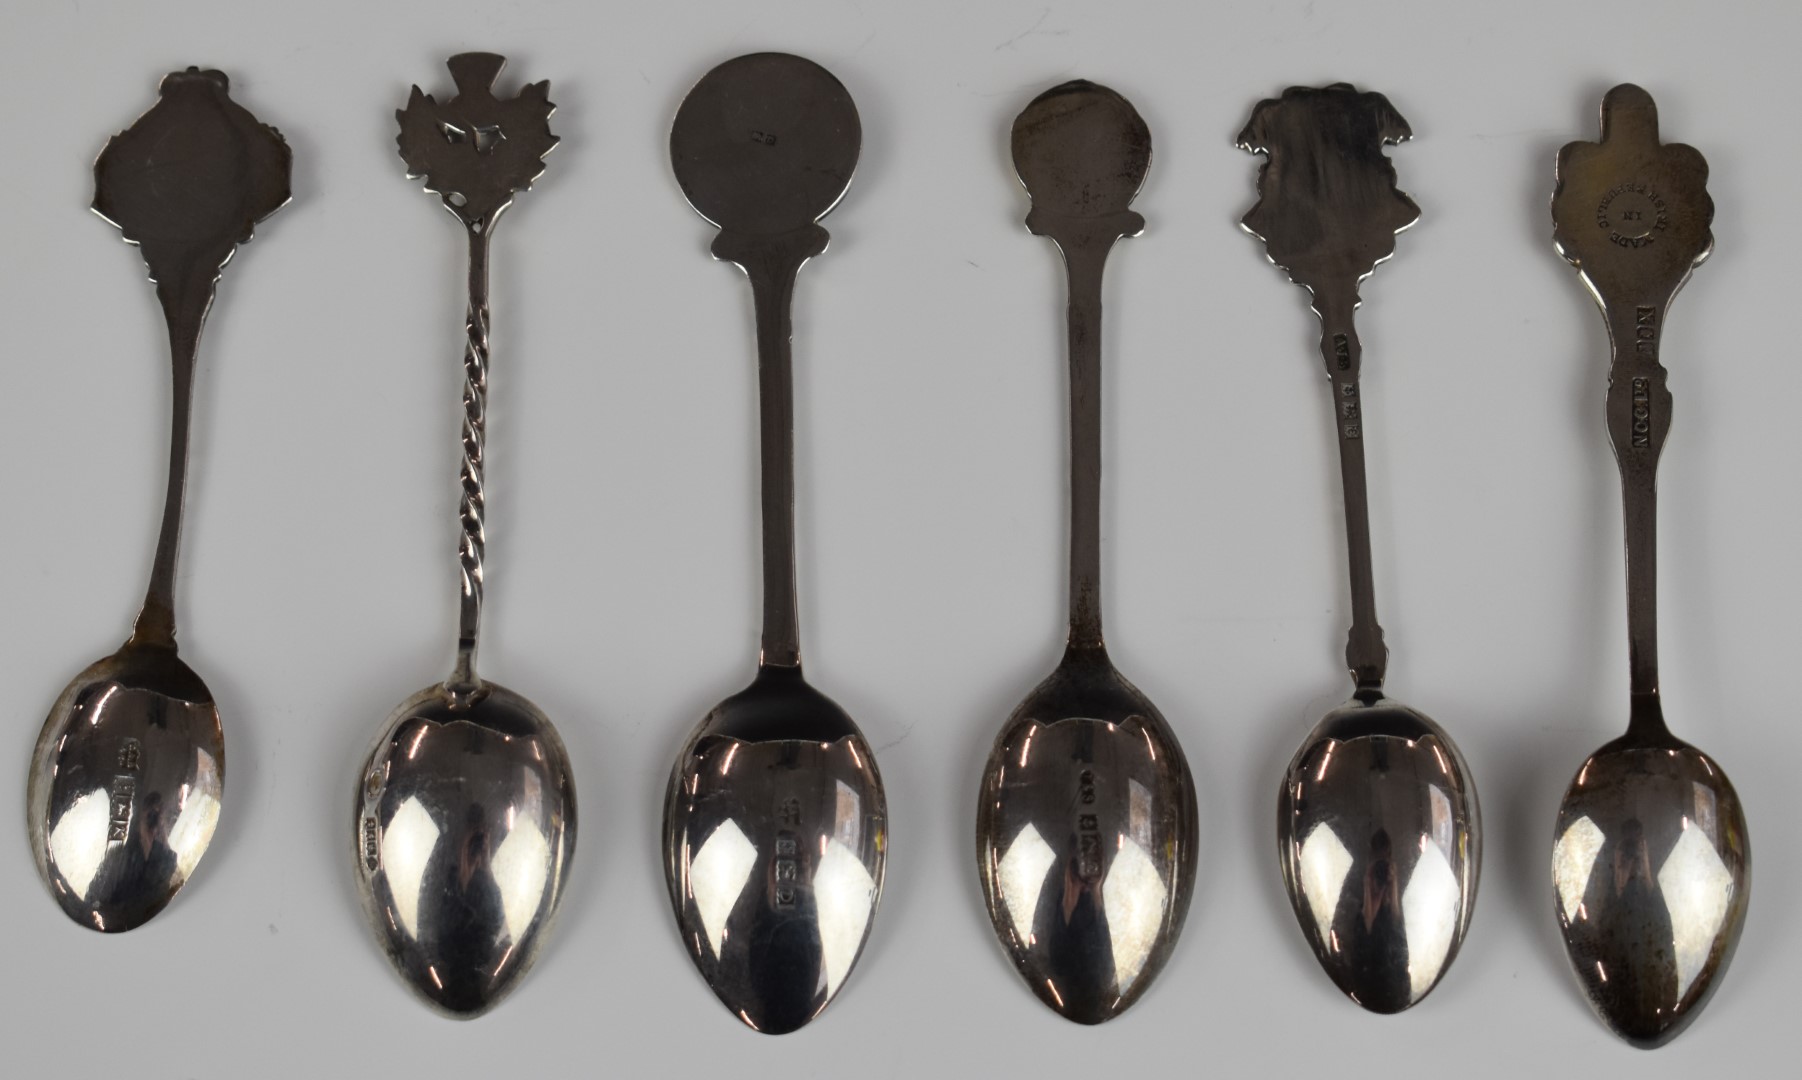 Six hallmarked silver souvenir spoons, most having enamel decoration, to include Llandudno, - Image 2 of 4